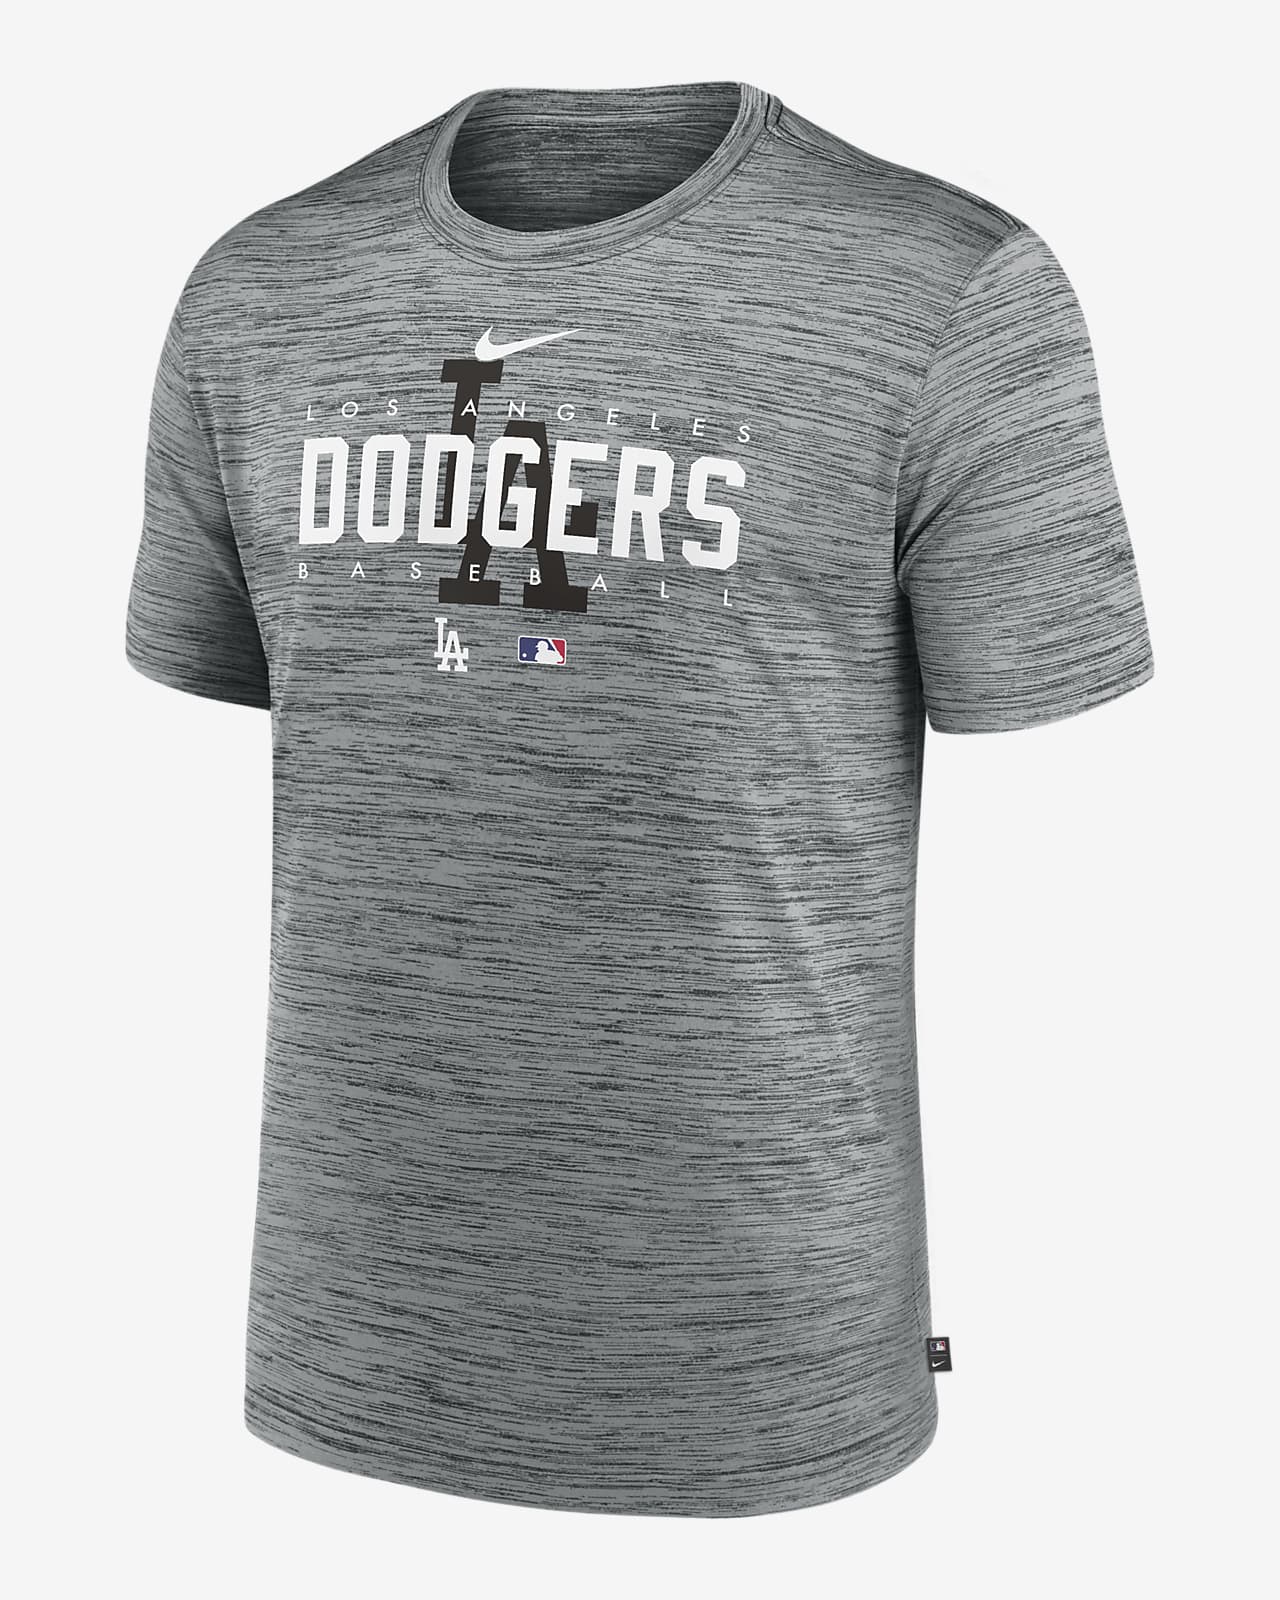 Nike Dri-FIT Velocity Practice (MLB Los Angeles Dodgers) Men's T-Shirt.